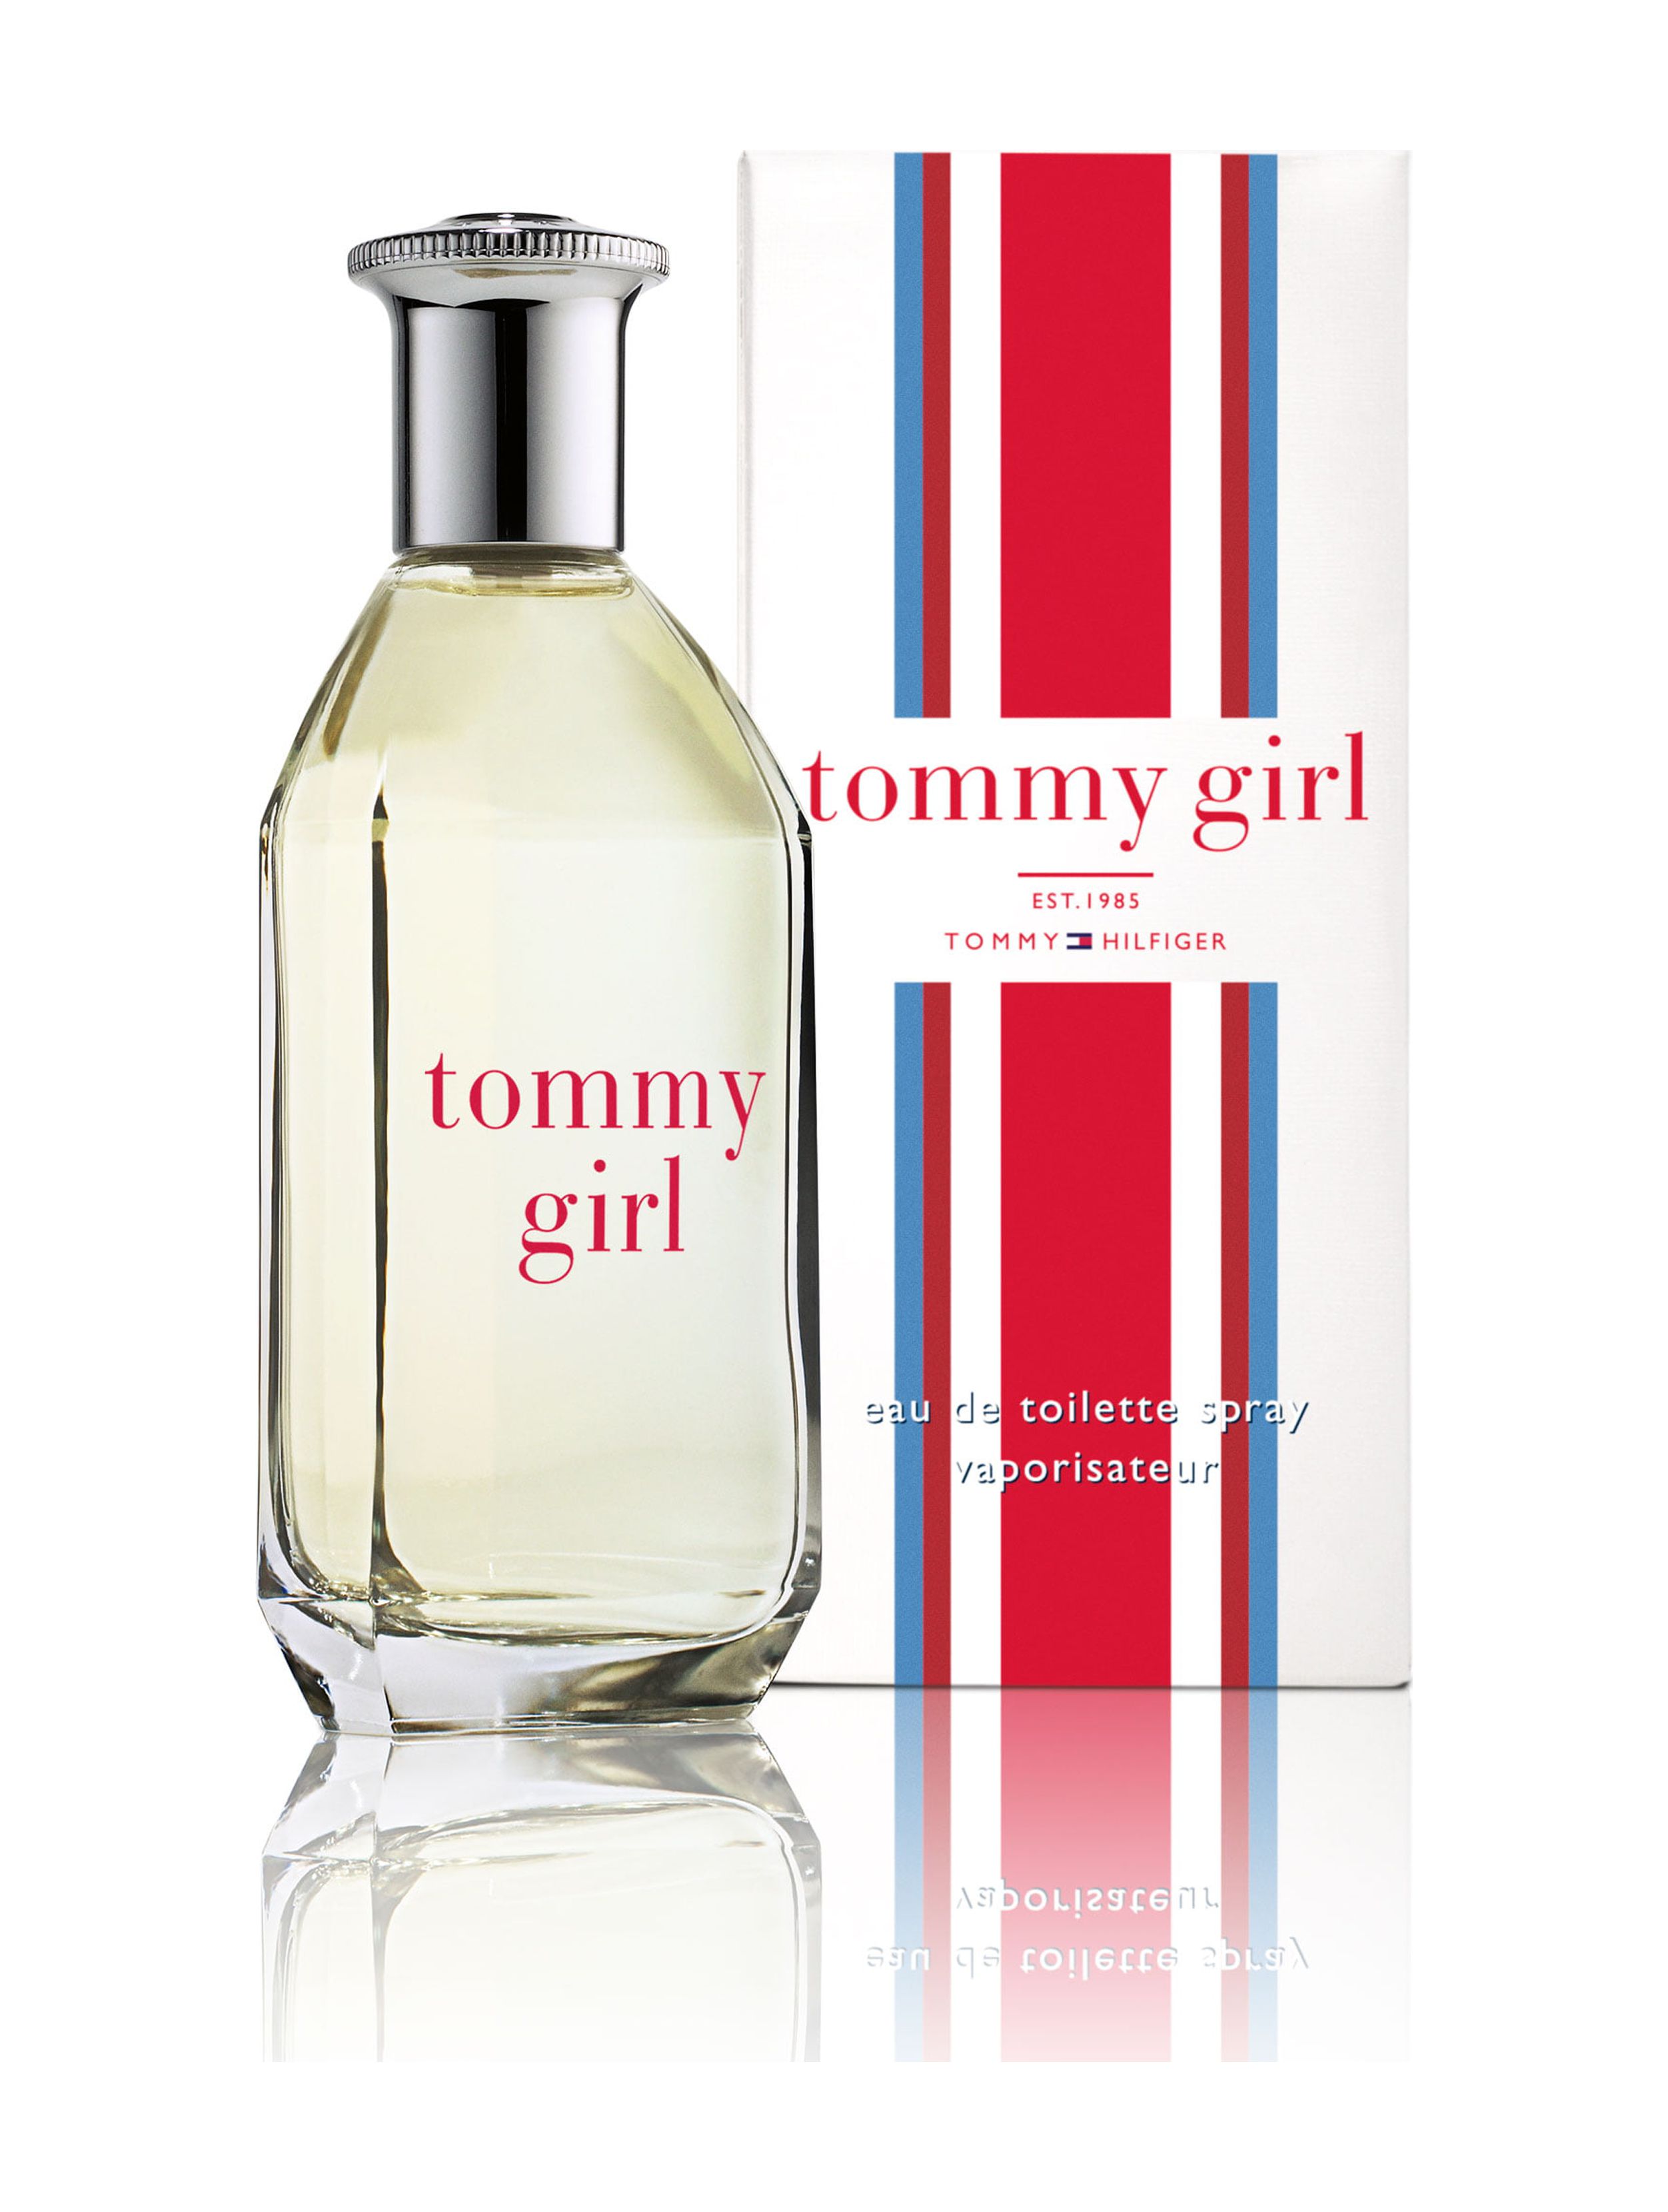 Tommy Hilfiger Beauty Tommy Girl Eau De Toilette Fragrance Spray, 0.5 Fl Oz - image 2 of 2